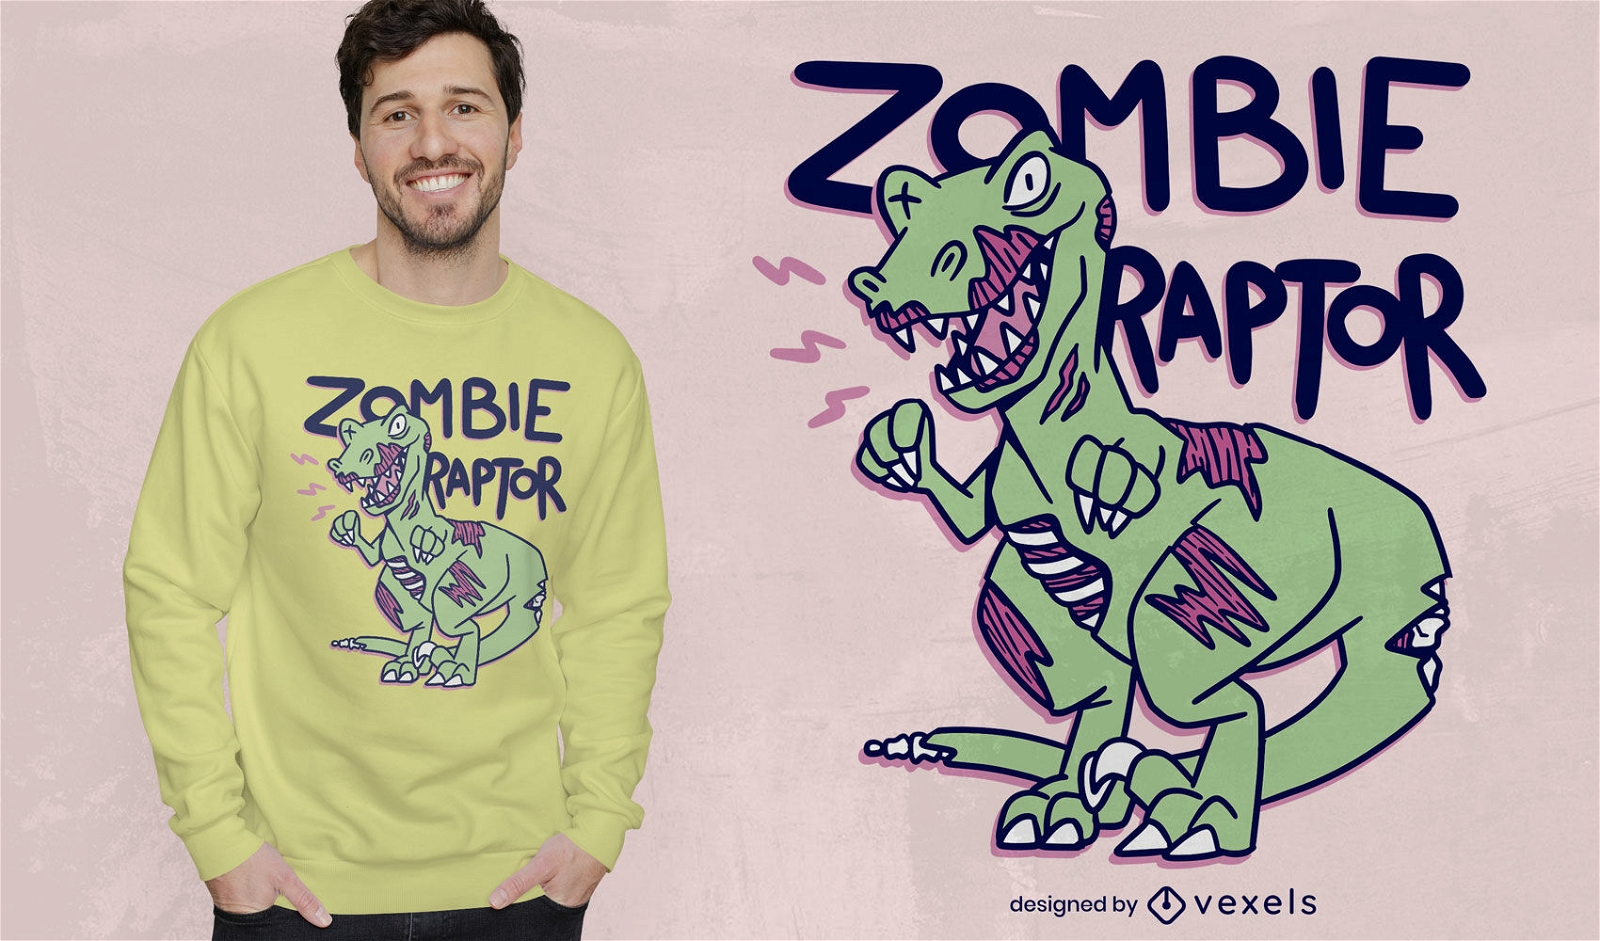 Cool Halloween zombie raptor t-shirt design